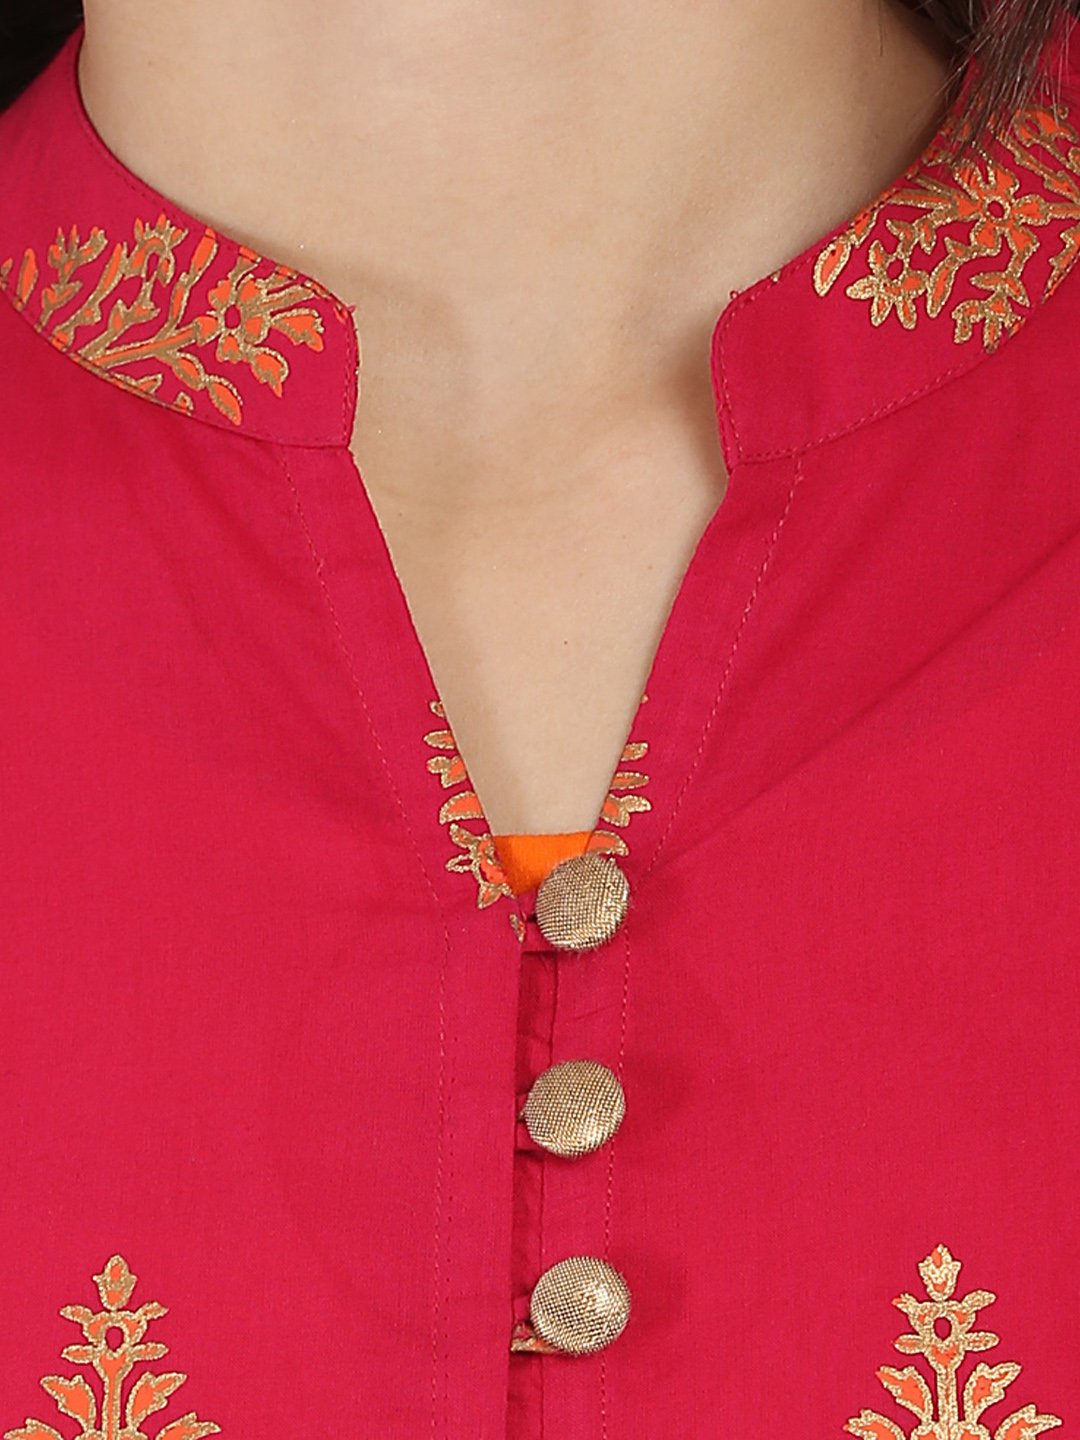 Women's Red And Orange Printed 3/4Th Sleeve Double Layer Cotton Kurta - Nayo Clothing